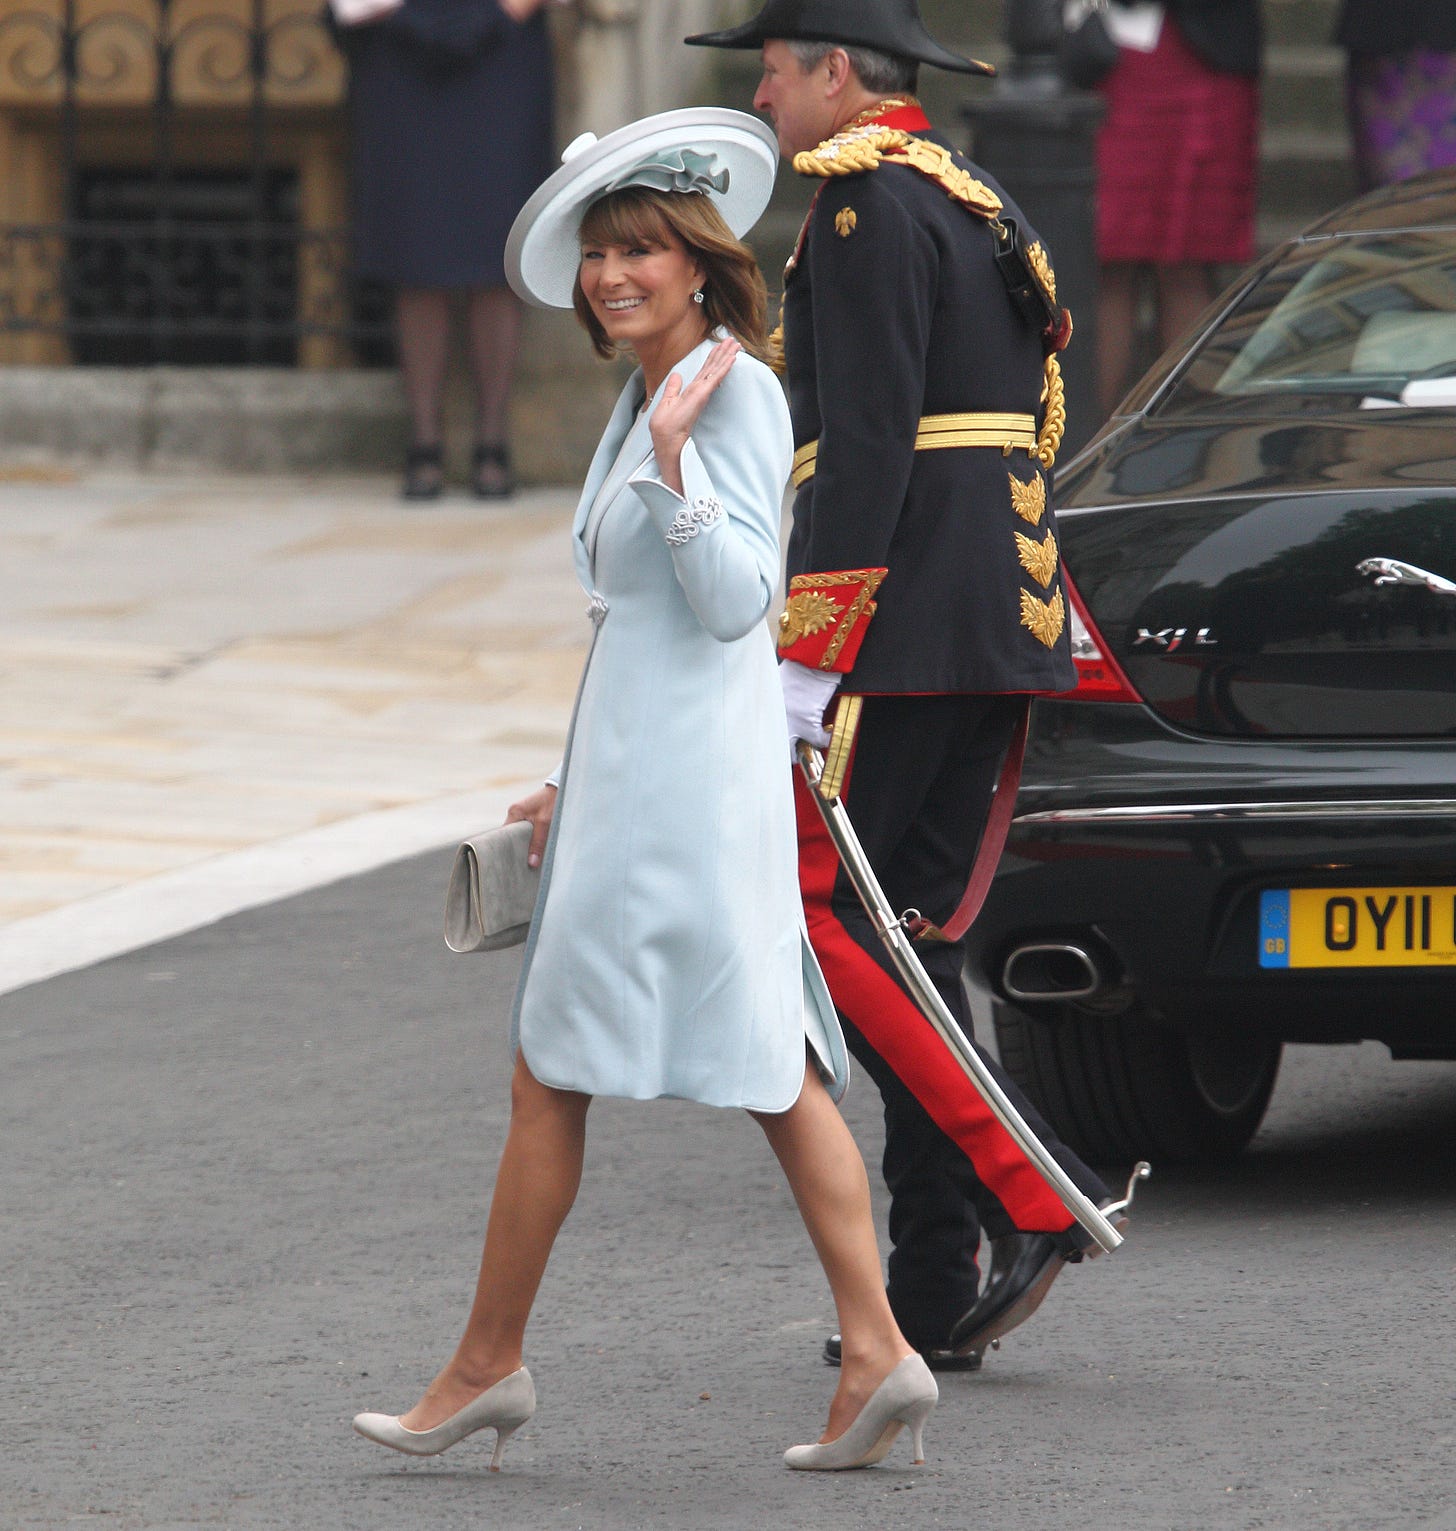 Carole Middleton at the royal wedding 2011